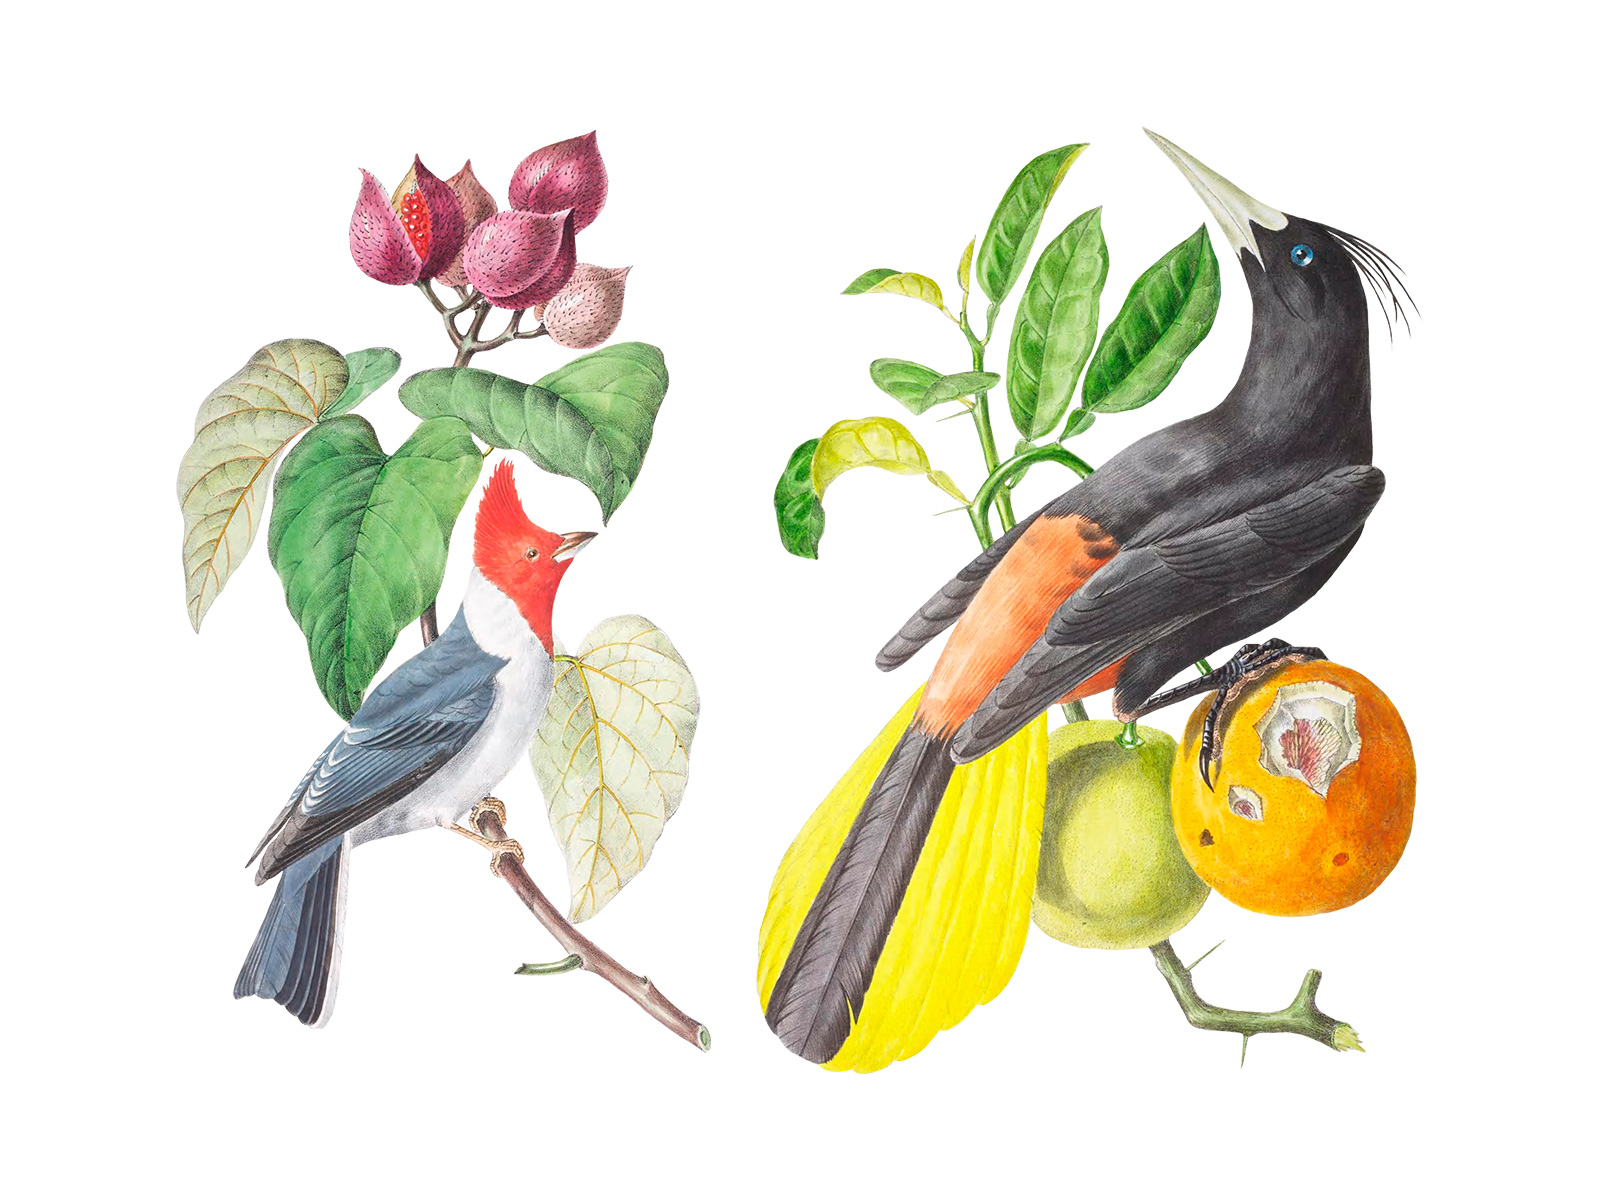 Eden Garden Illustrations Set By Pixelbuddha On Dribbble